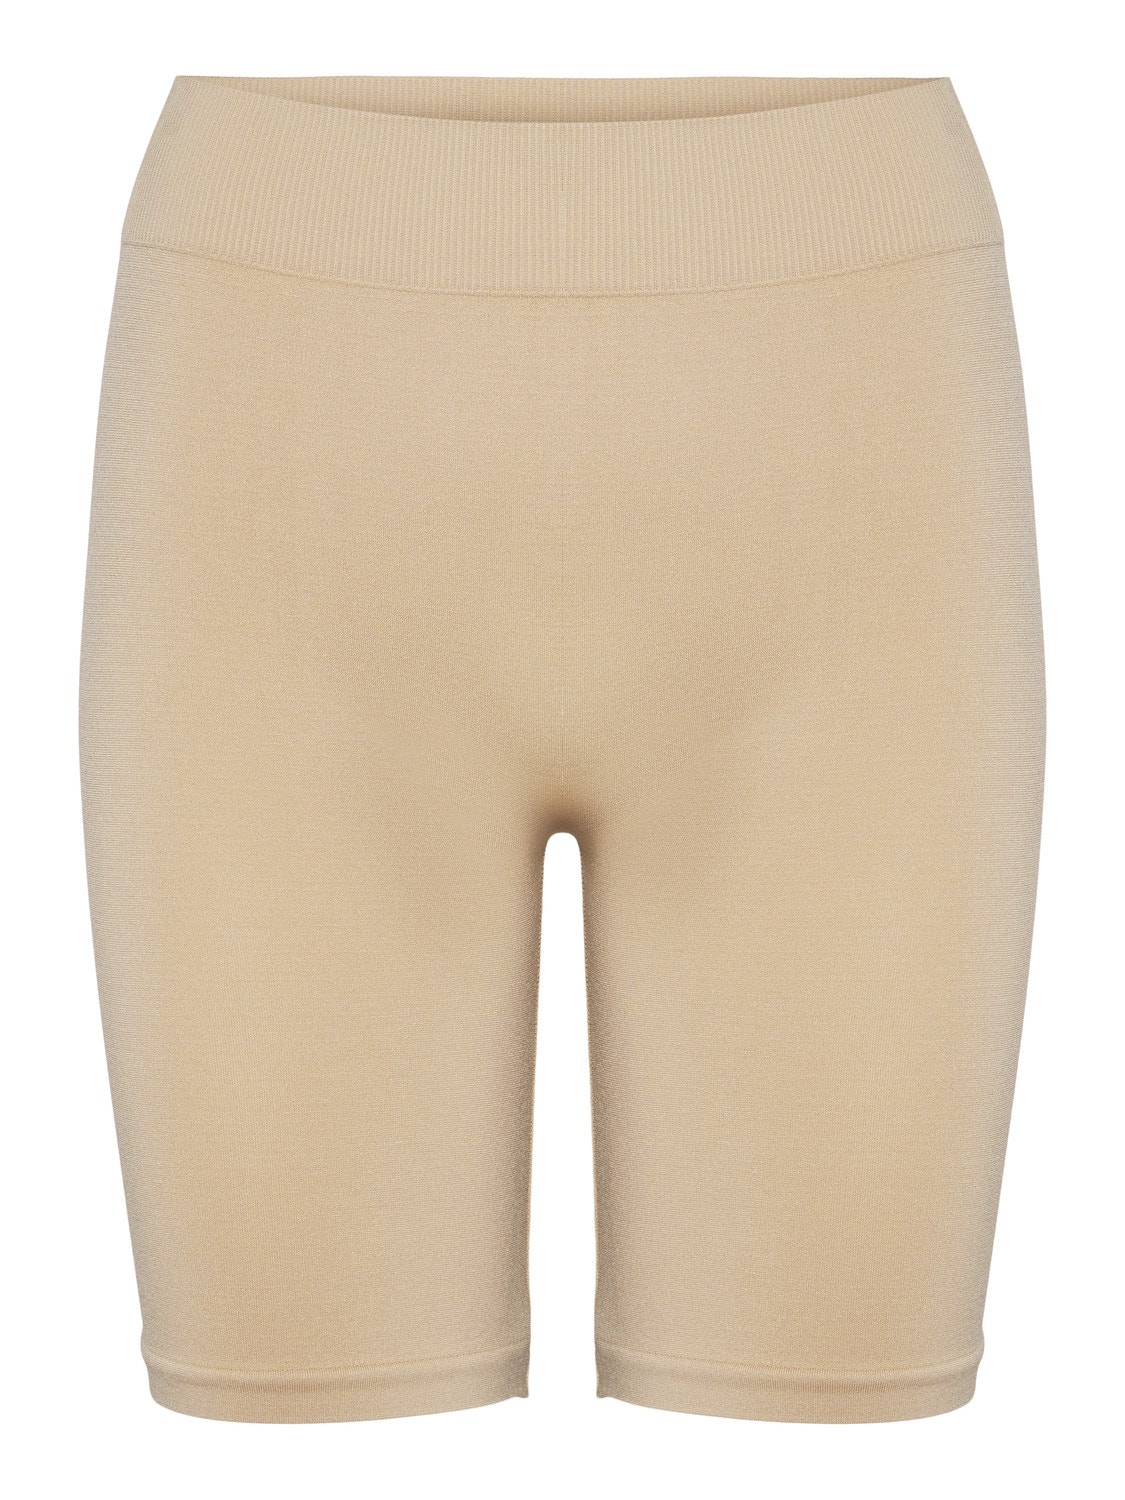 Vero Moda VMJACKIE Underwear -Tan - 10285273